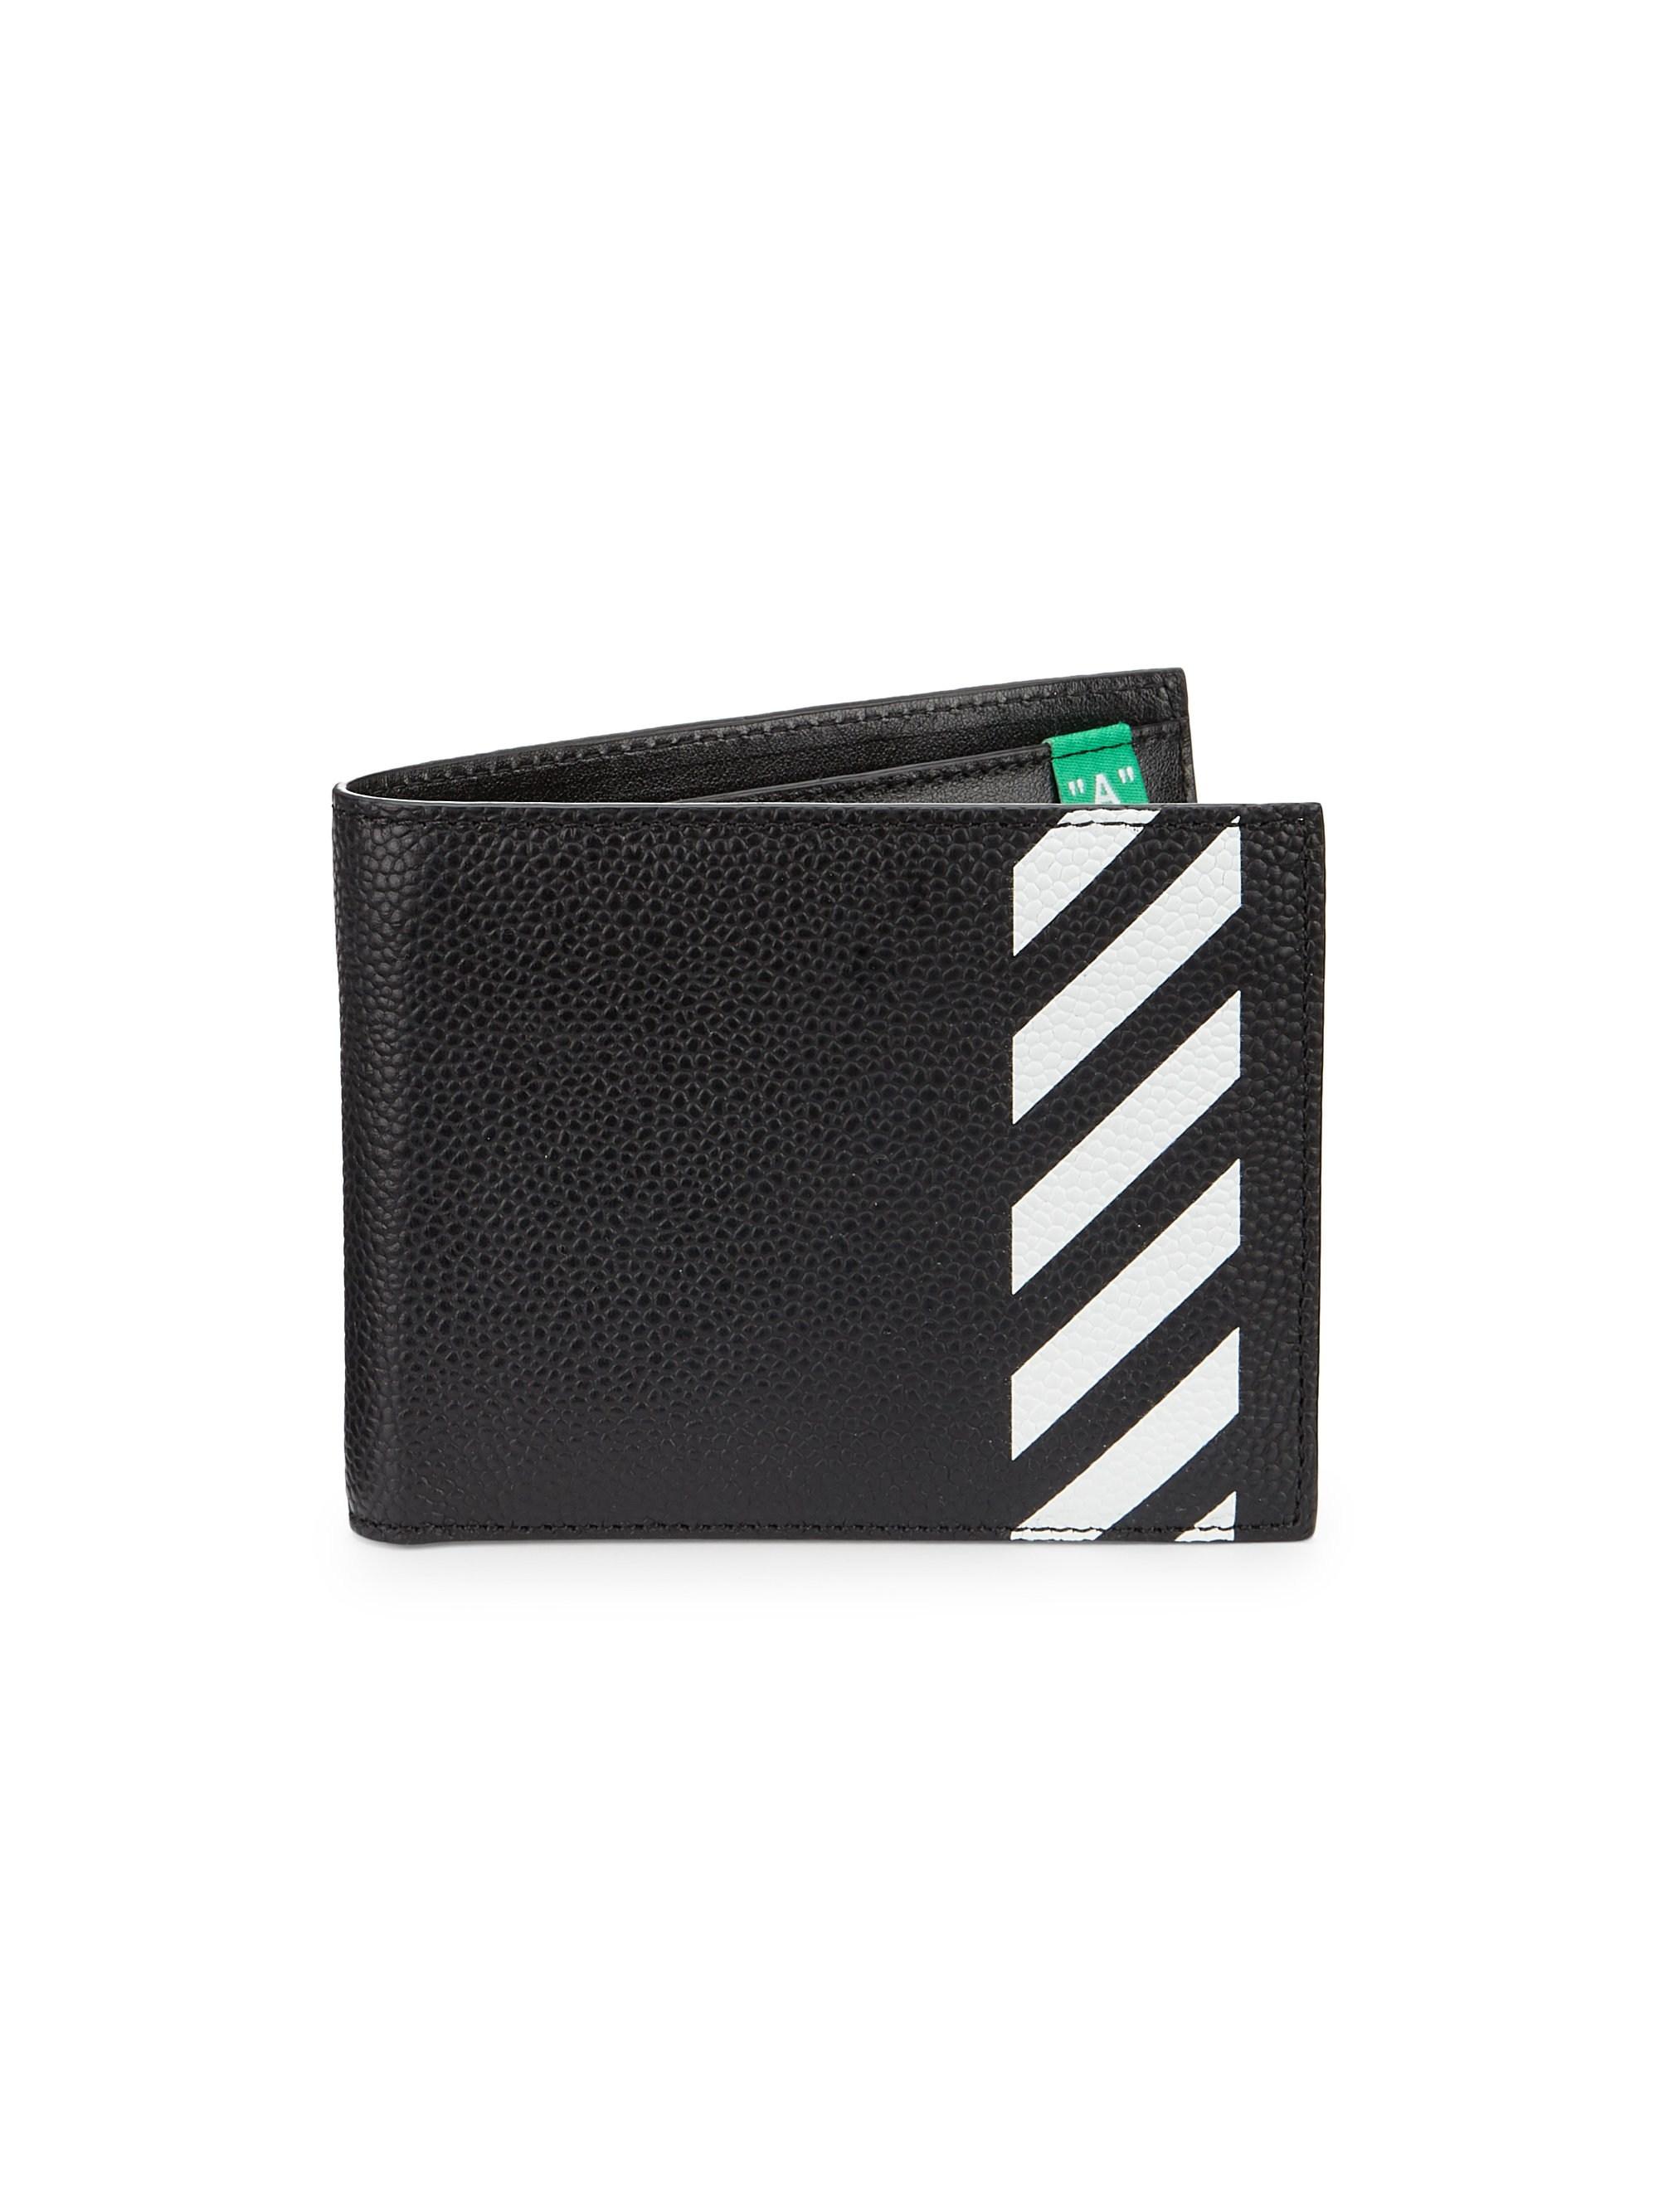 Off-White c/o Virgil Abloh Diagonal Graphic Leather Billfold Wallet in Black for Men - Lyst